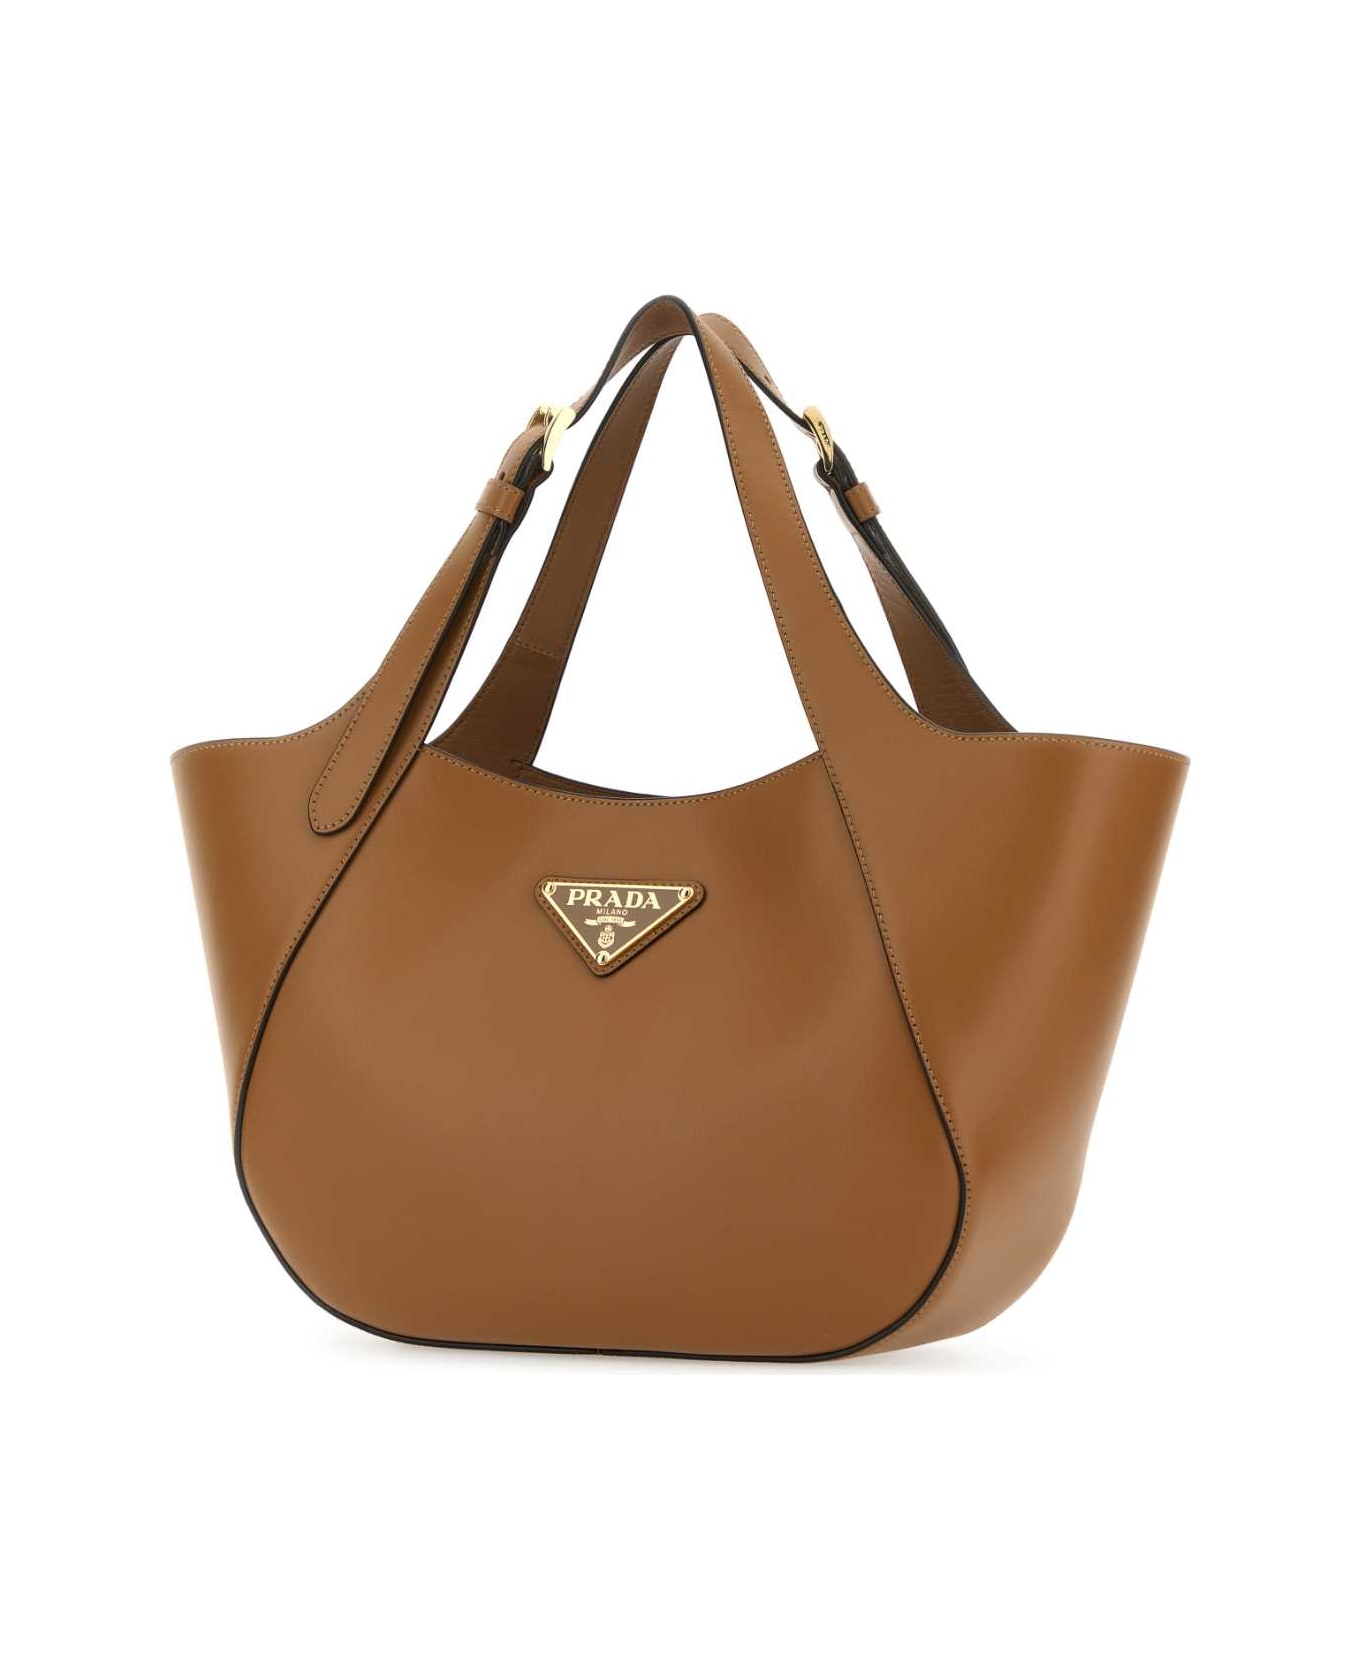 Prada Brown Leather Handbag - CARAMEL0N トートバッグ